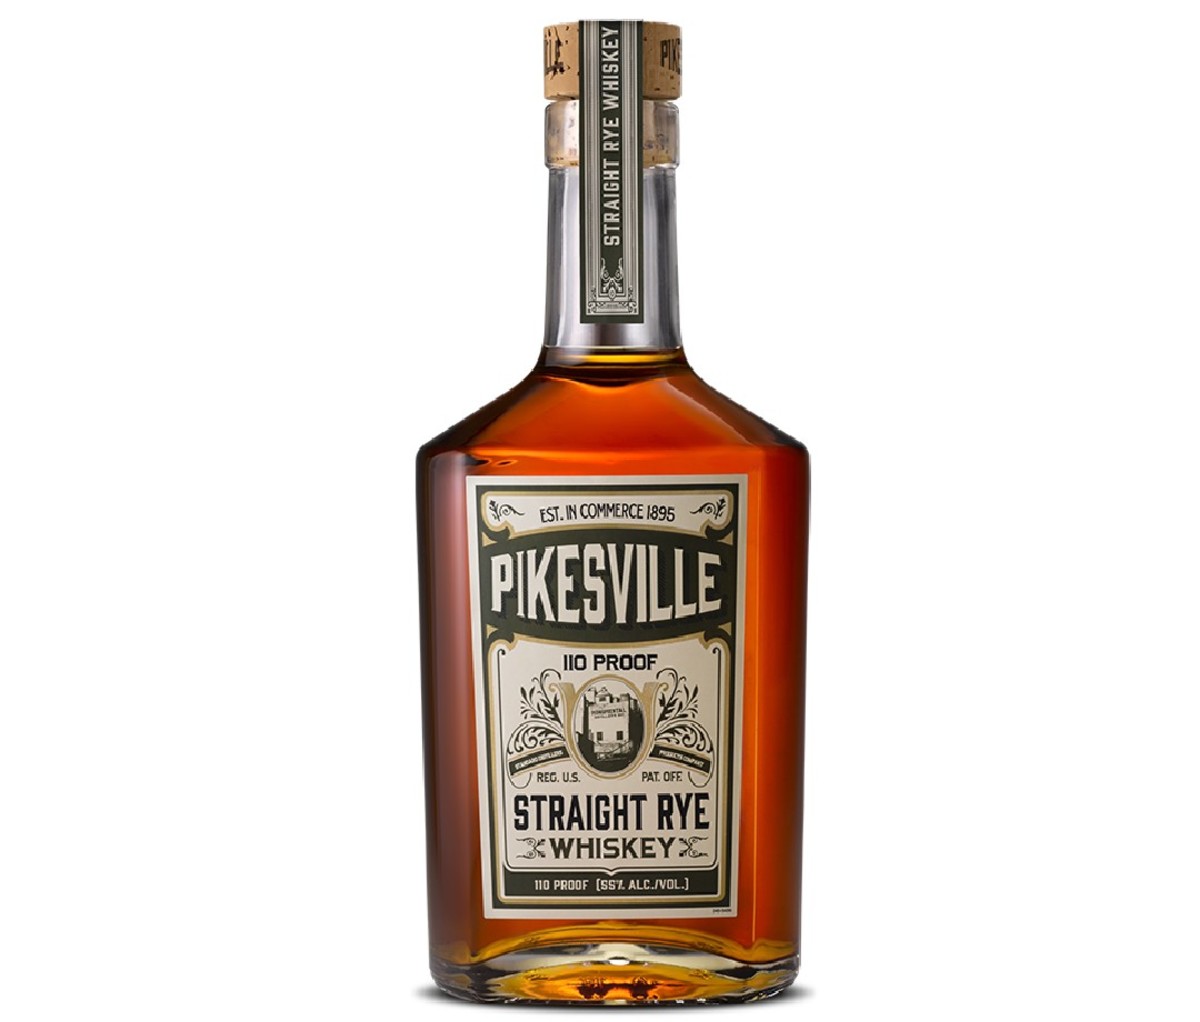 Bottle of Pikesville Straight Rye